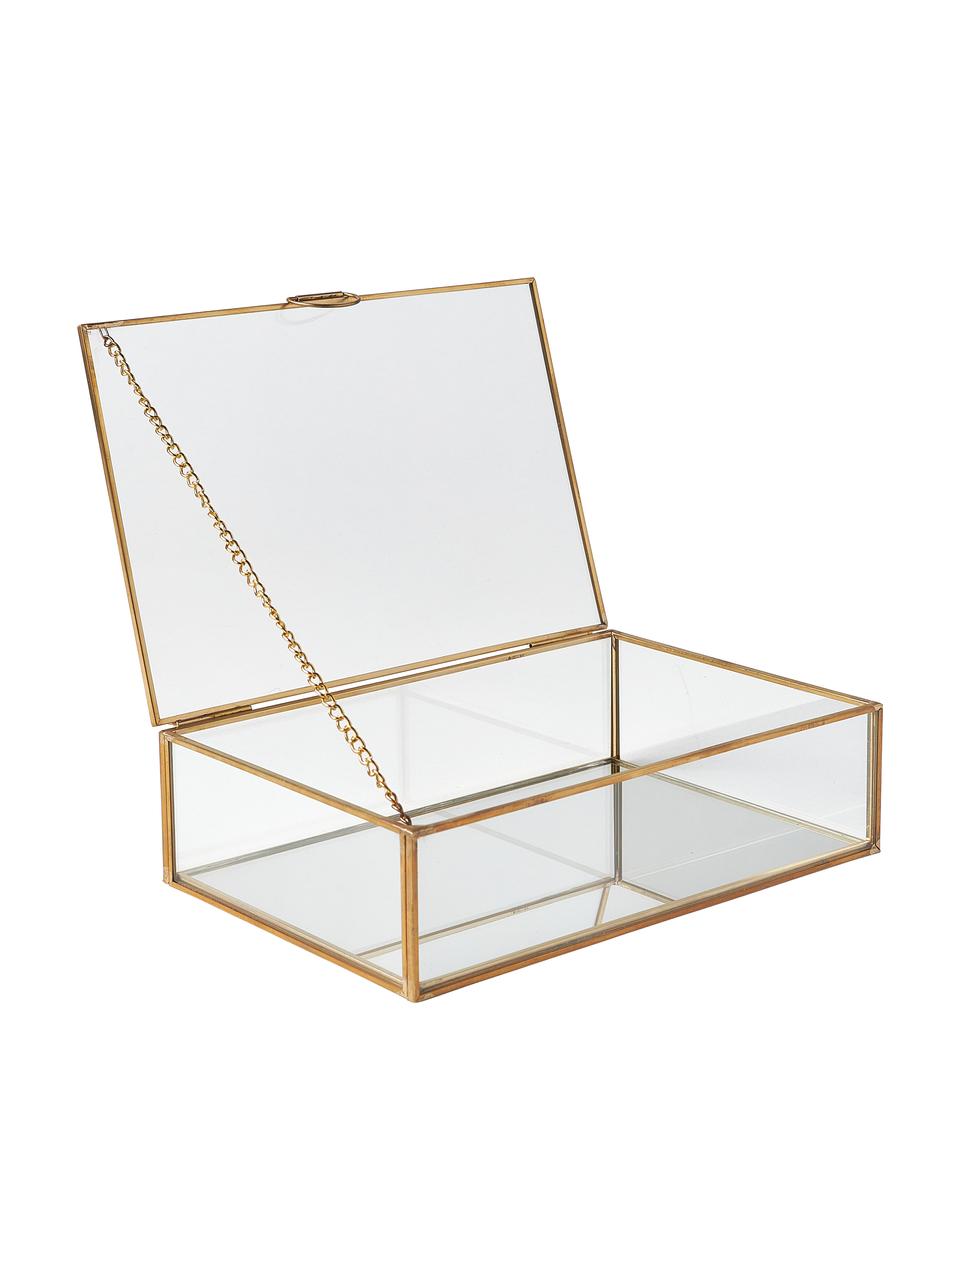 Skladovací box  ze skla Lirio, Transparentní, mosazná, Š 20 cm, V 6 cm